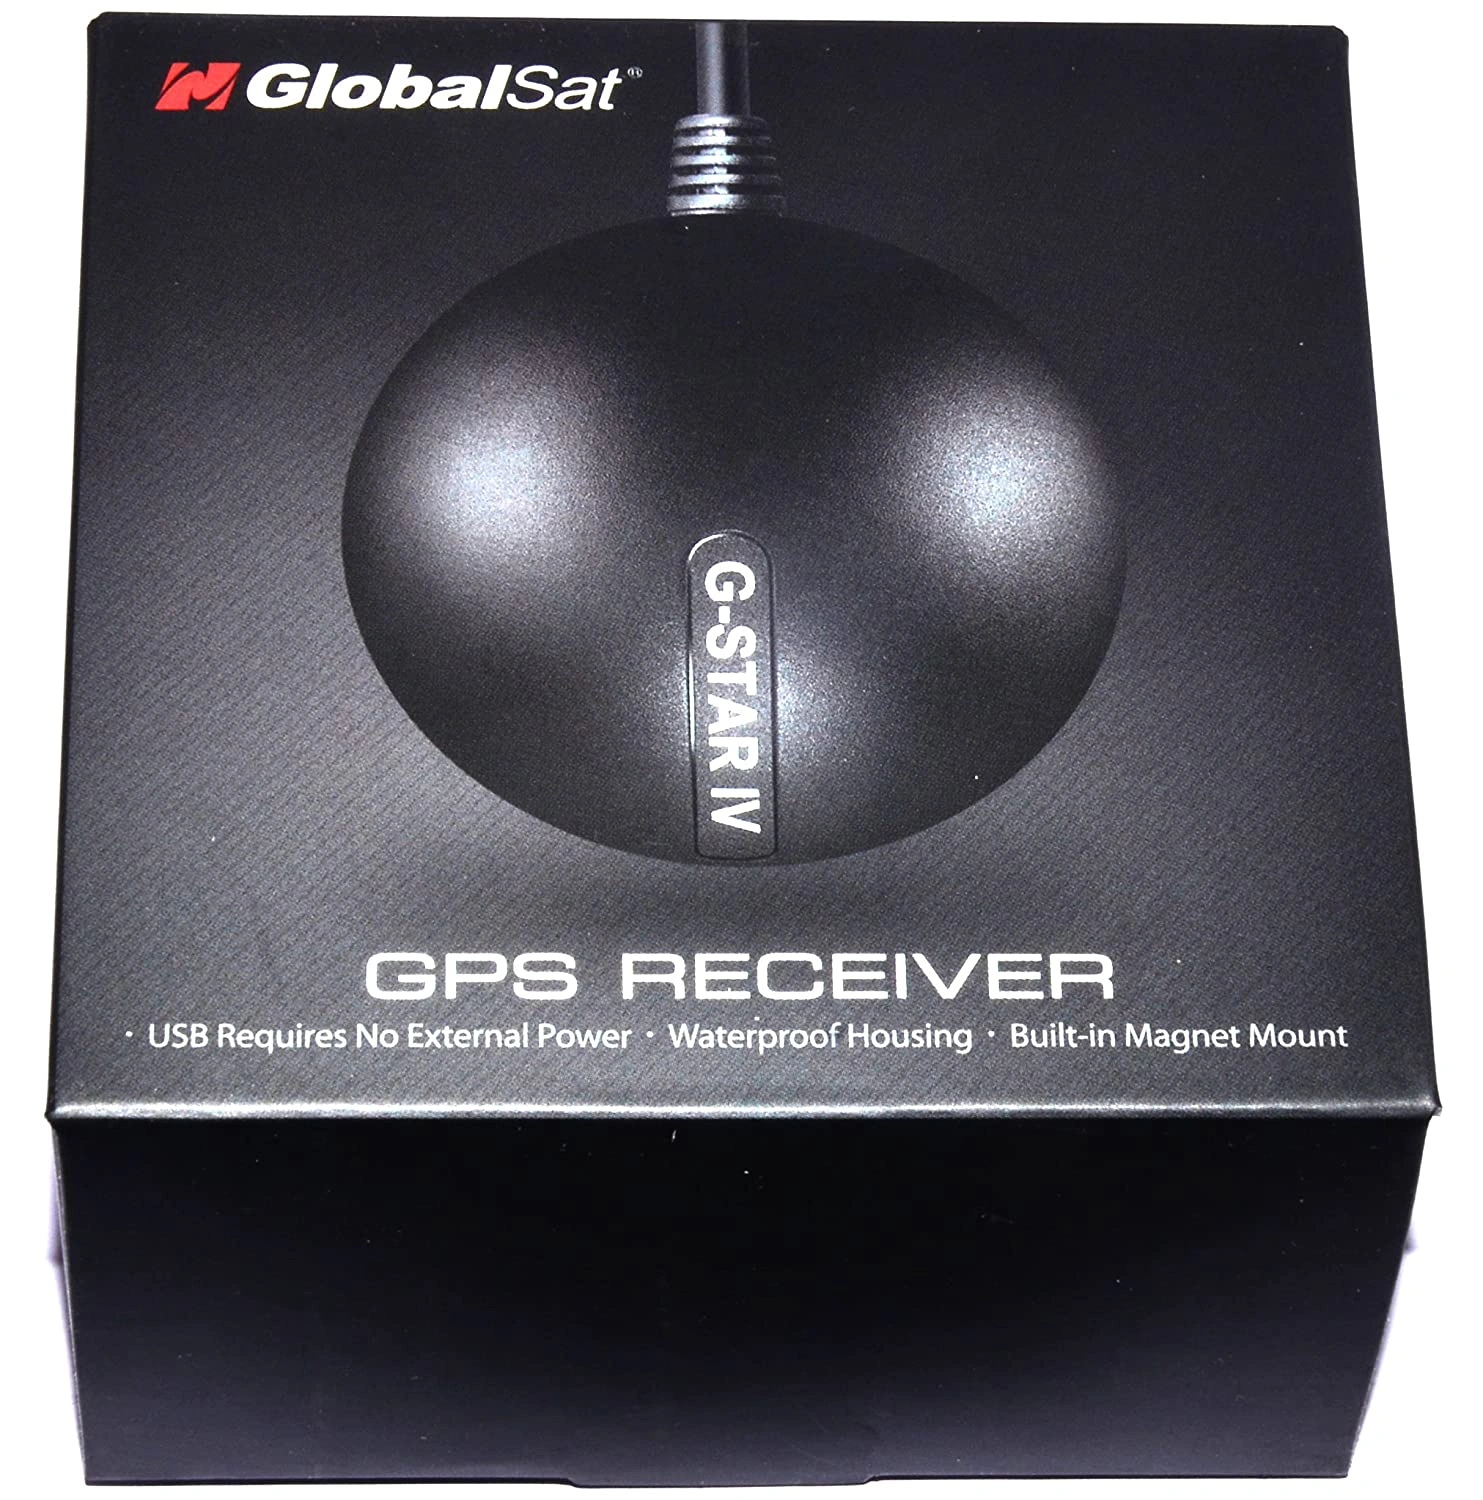 globalset bu-353-s4 usb gps receiver